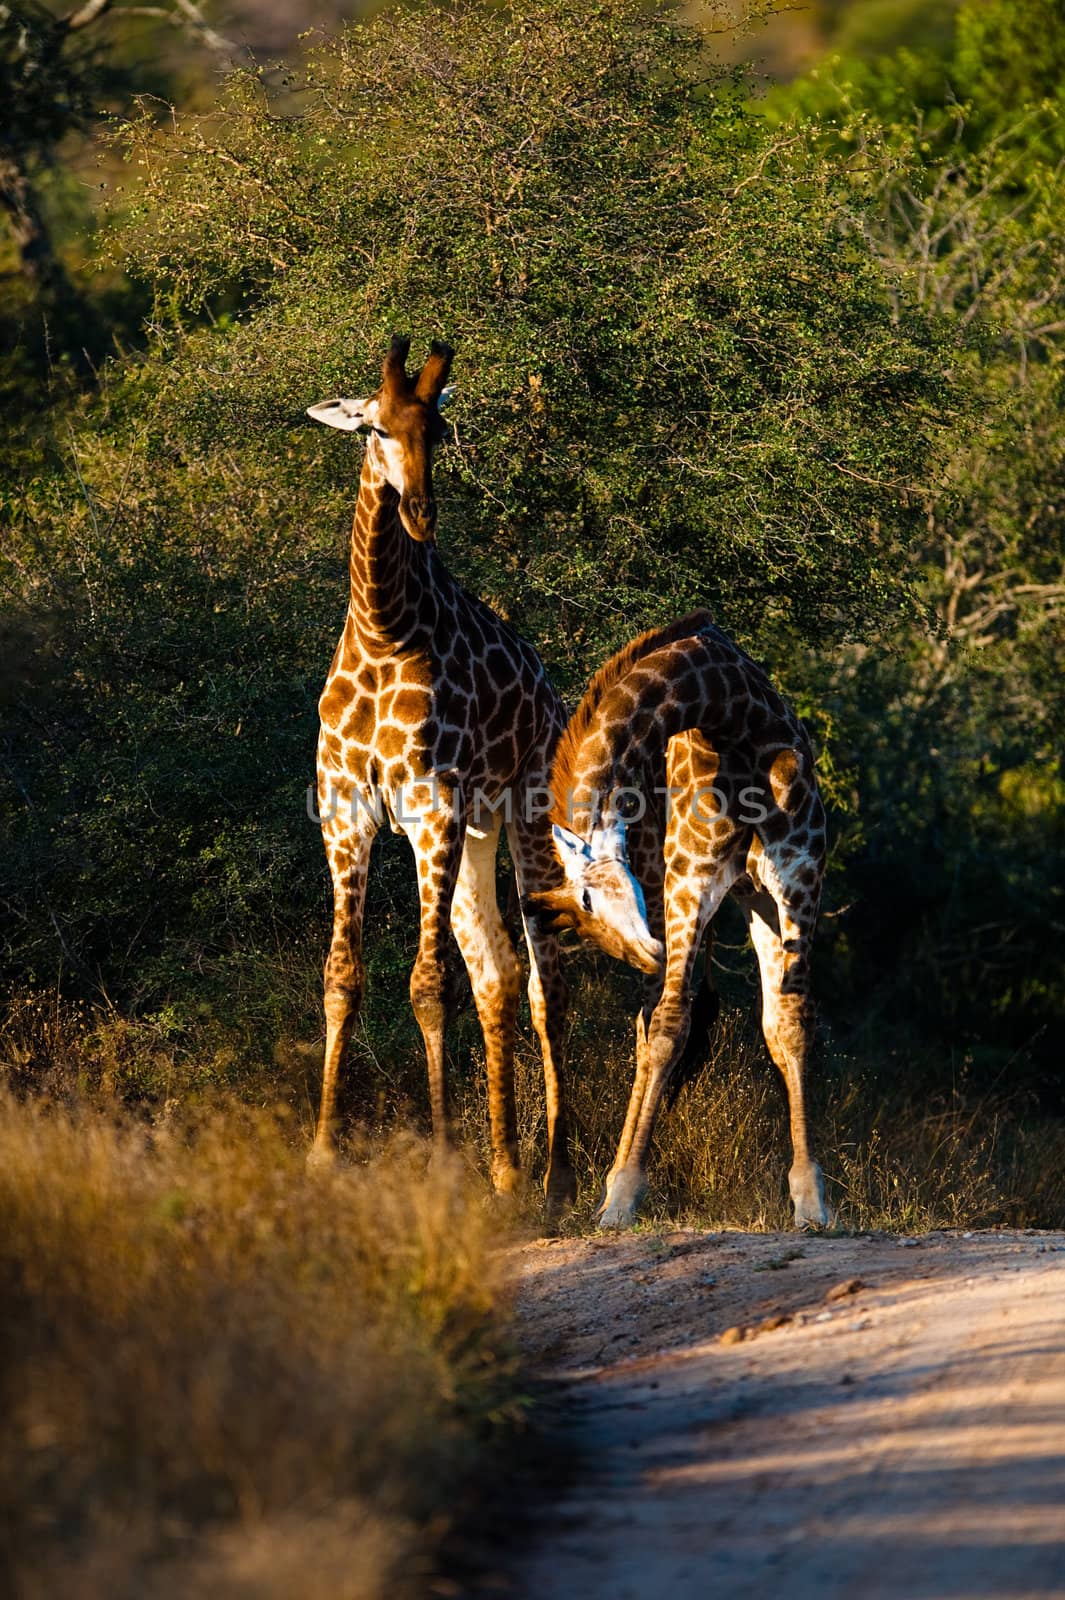 Giraffes by edan